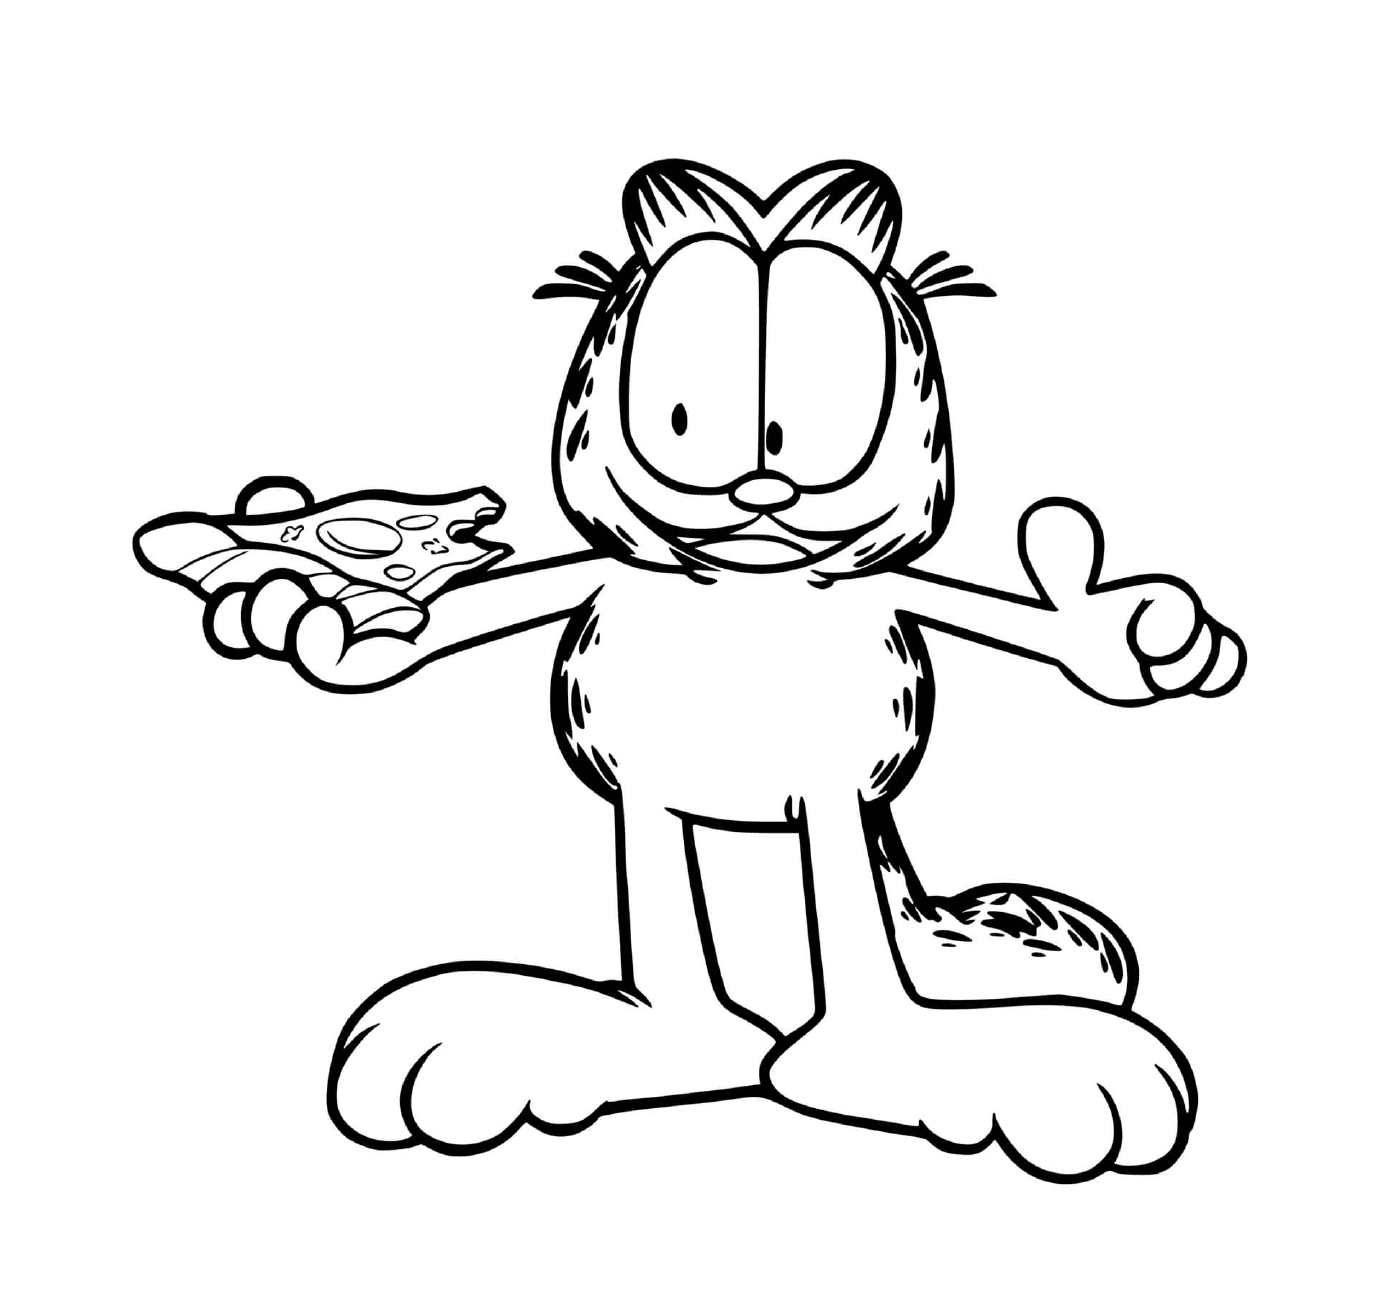   Garfield dévore une pizza 